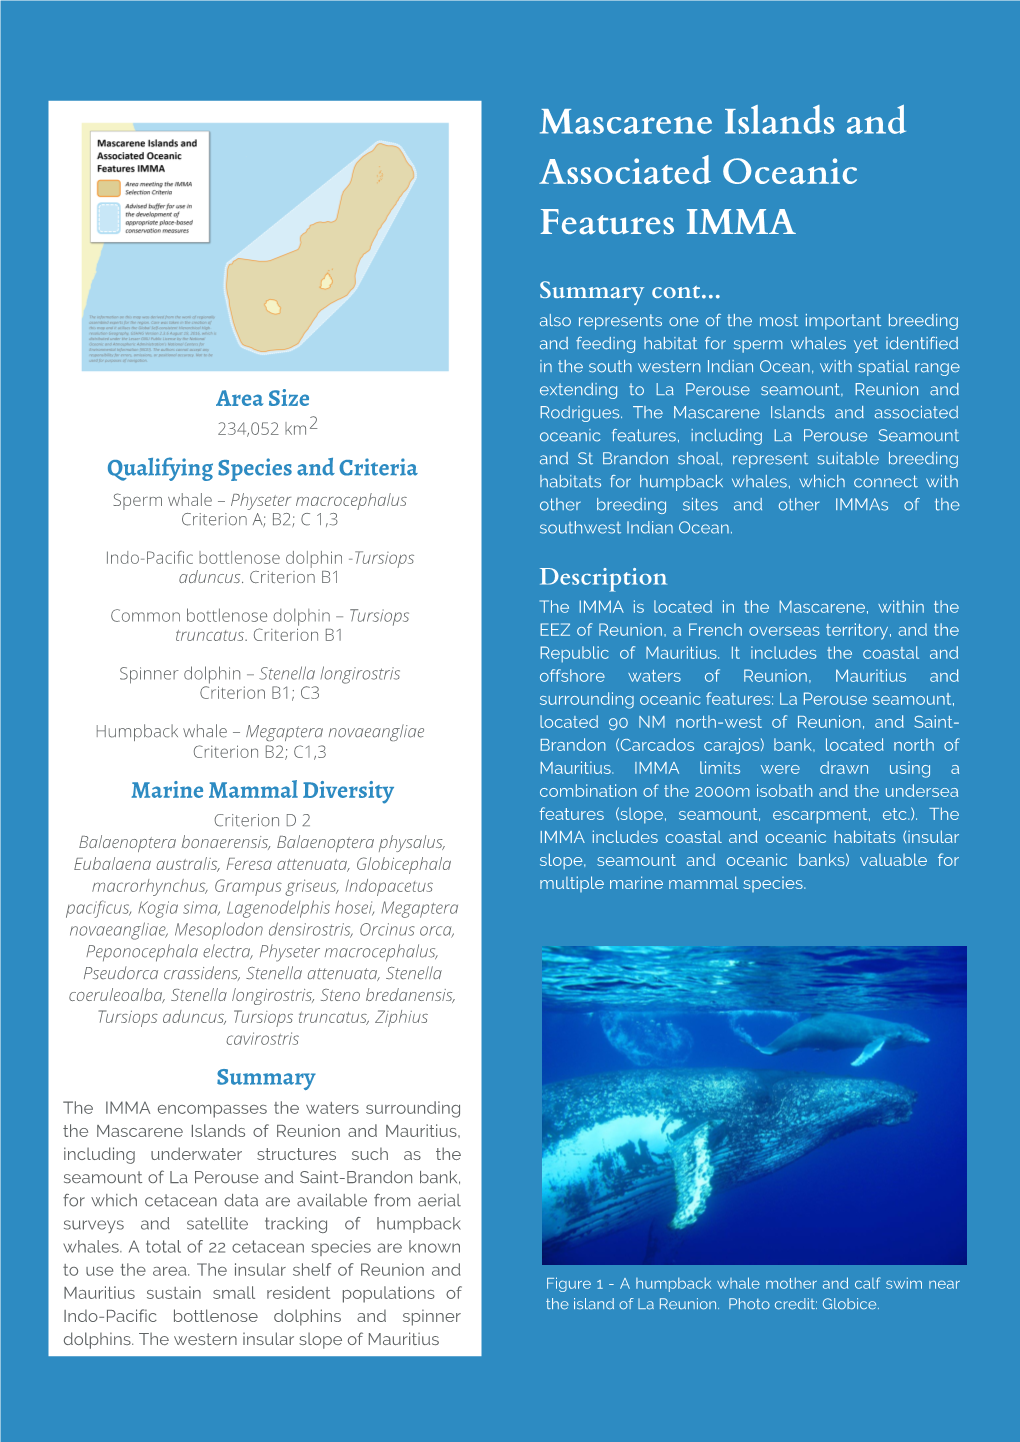 Mascarene Islands and Associated Oceanic Features IMMA